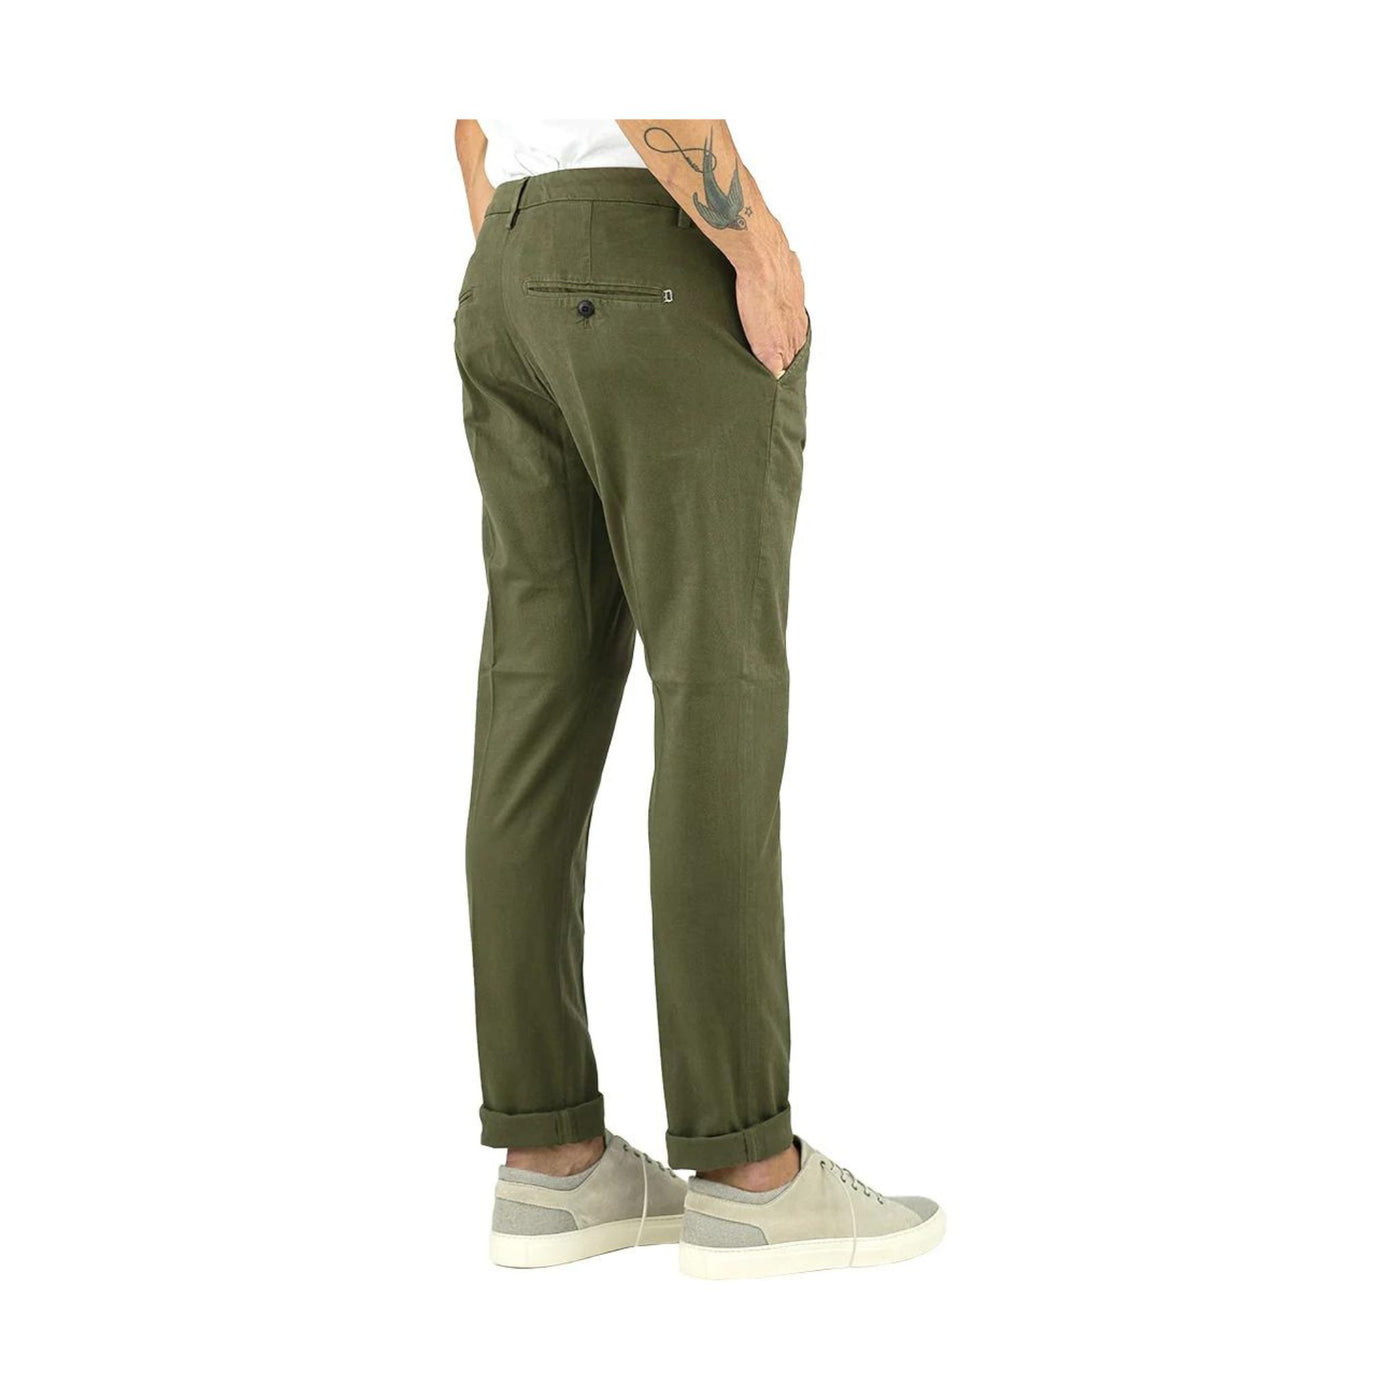 Men's Gaubert model trousers